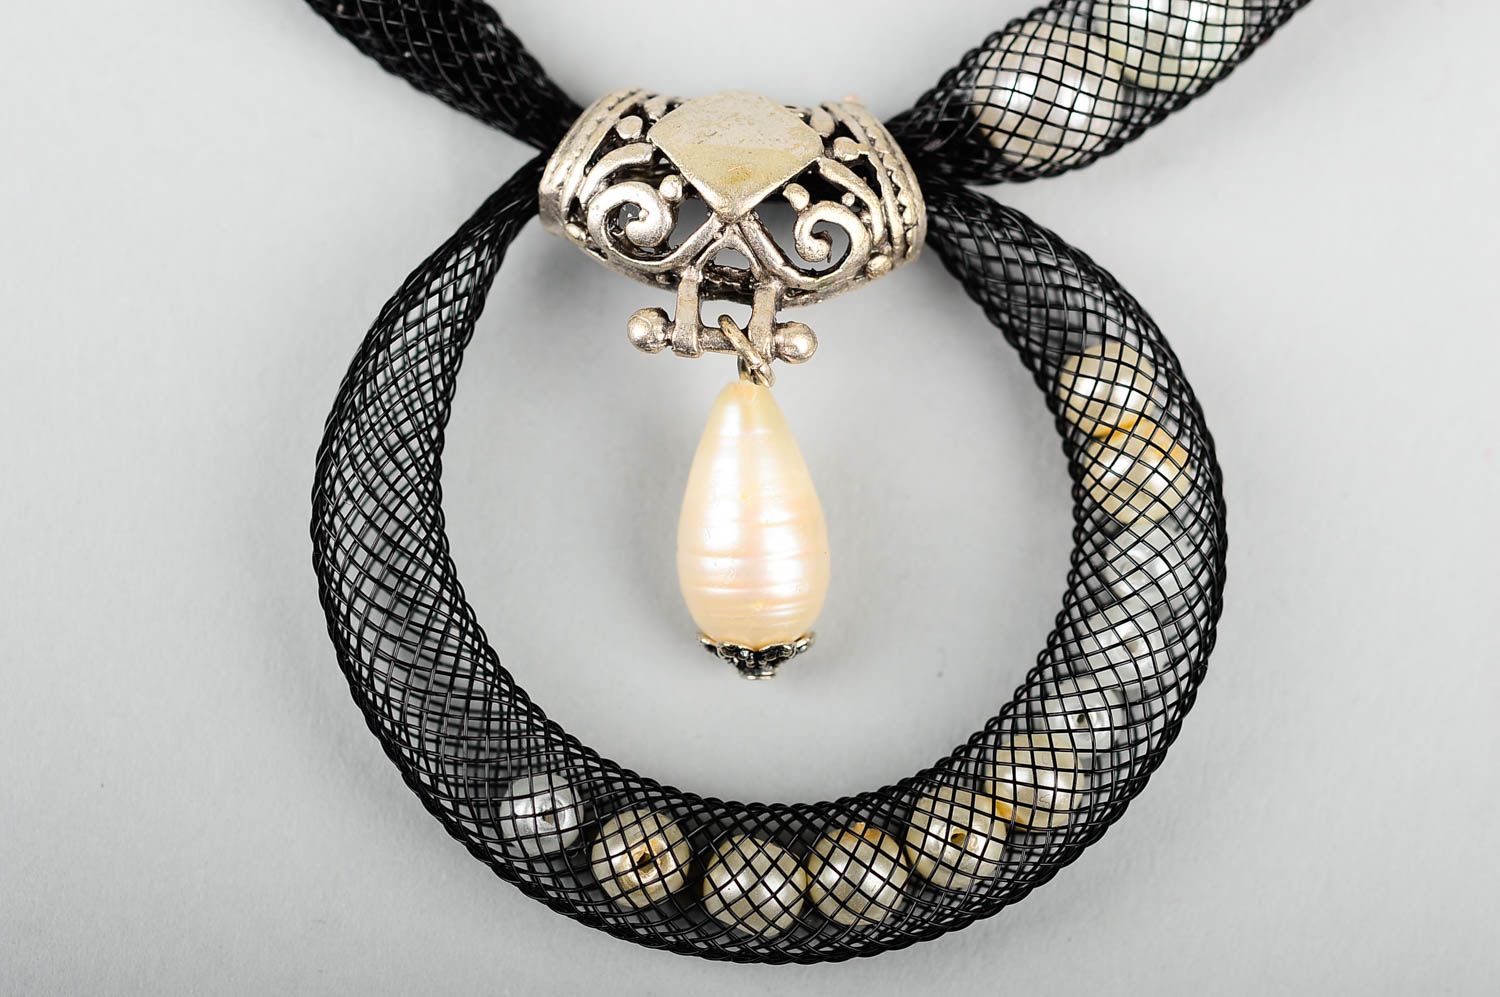 Stylish handmade beaded necklace artisan jewelry designs neck accessories photo 4